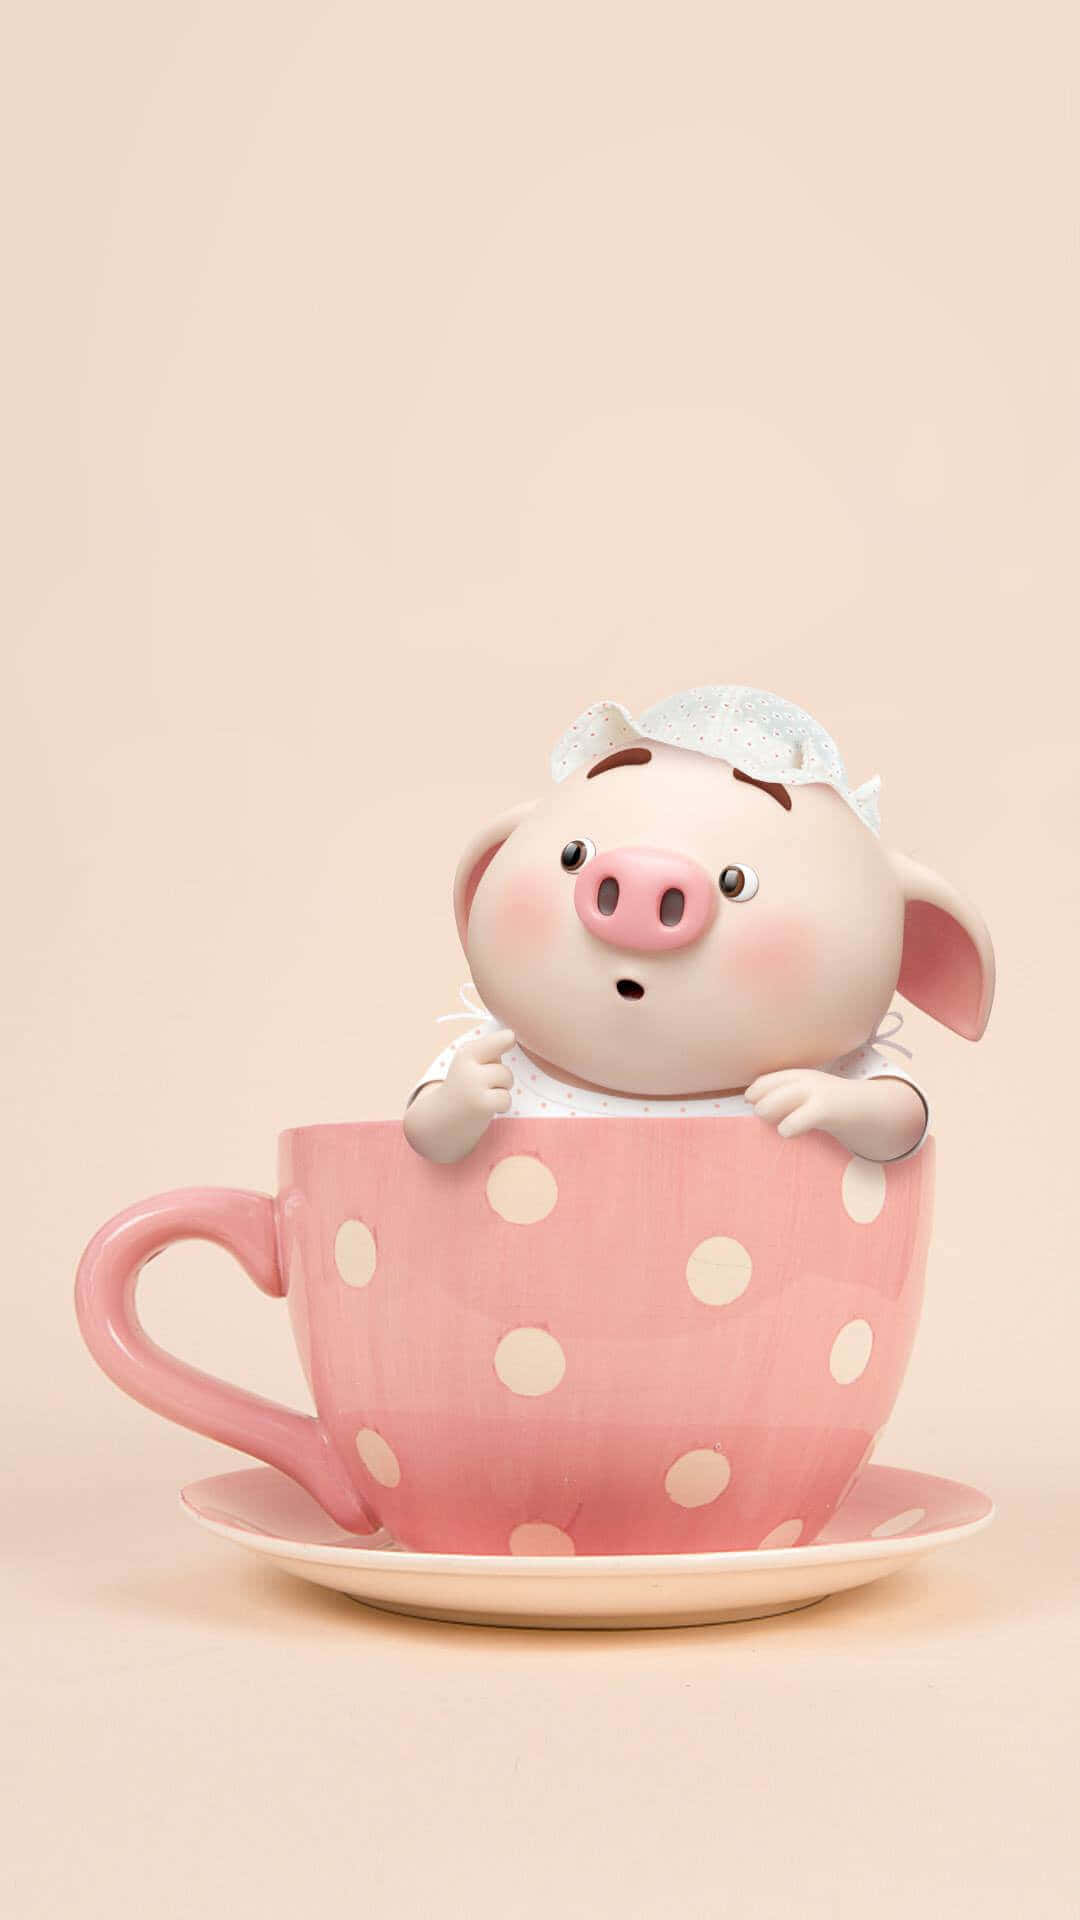 Cool Piggy In Cup Wallpaper